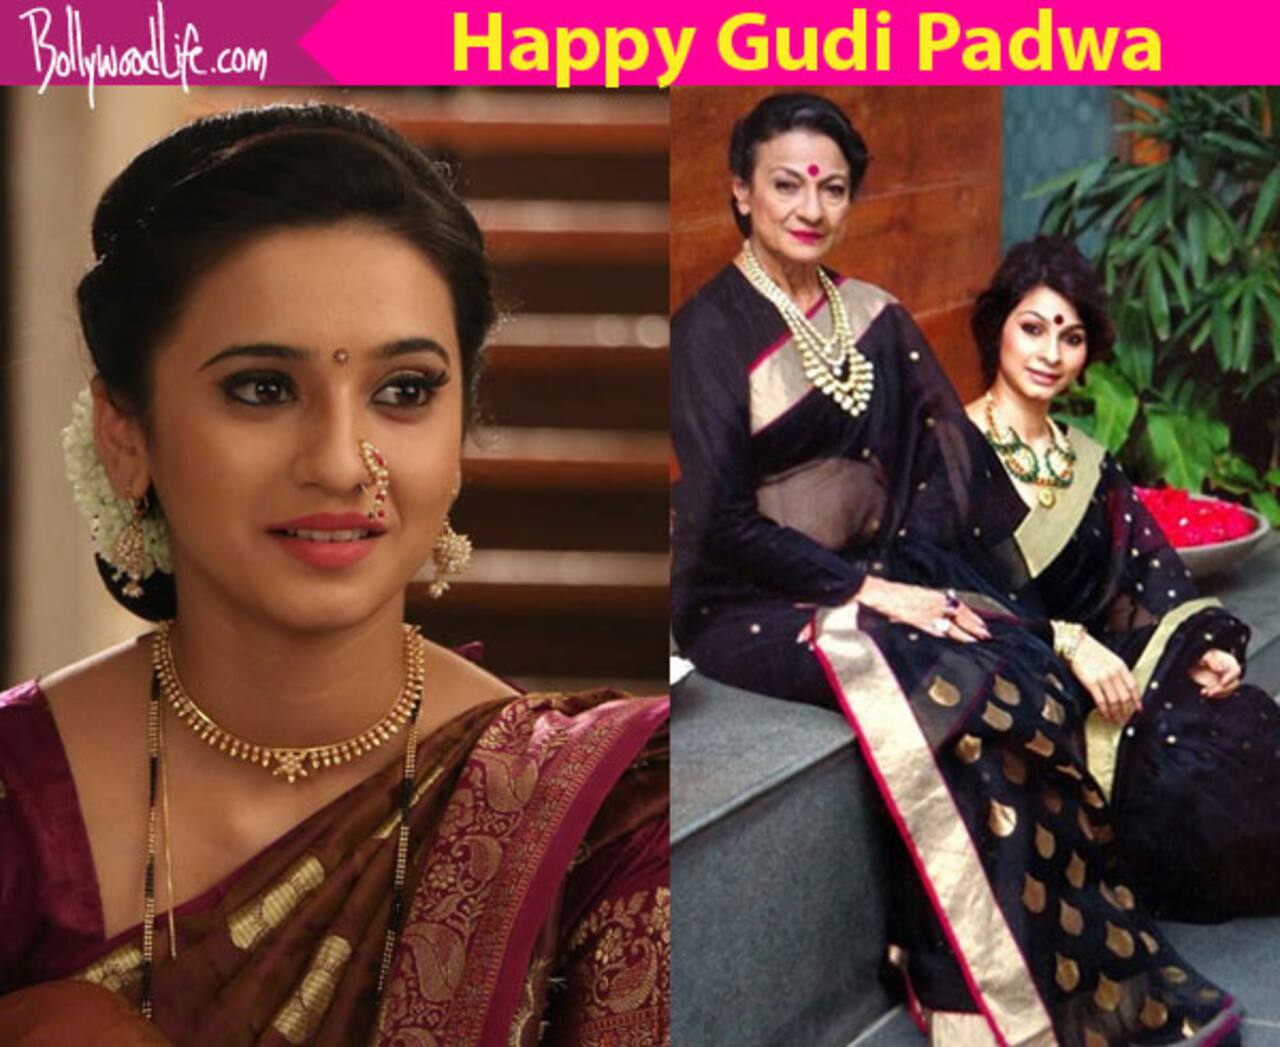 Gudi Padwa special: Shivani Surve, Sharad Kelkar, Tanishaa wish fans on the occasion